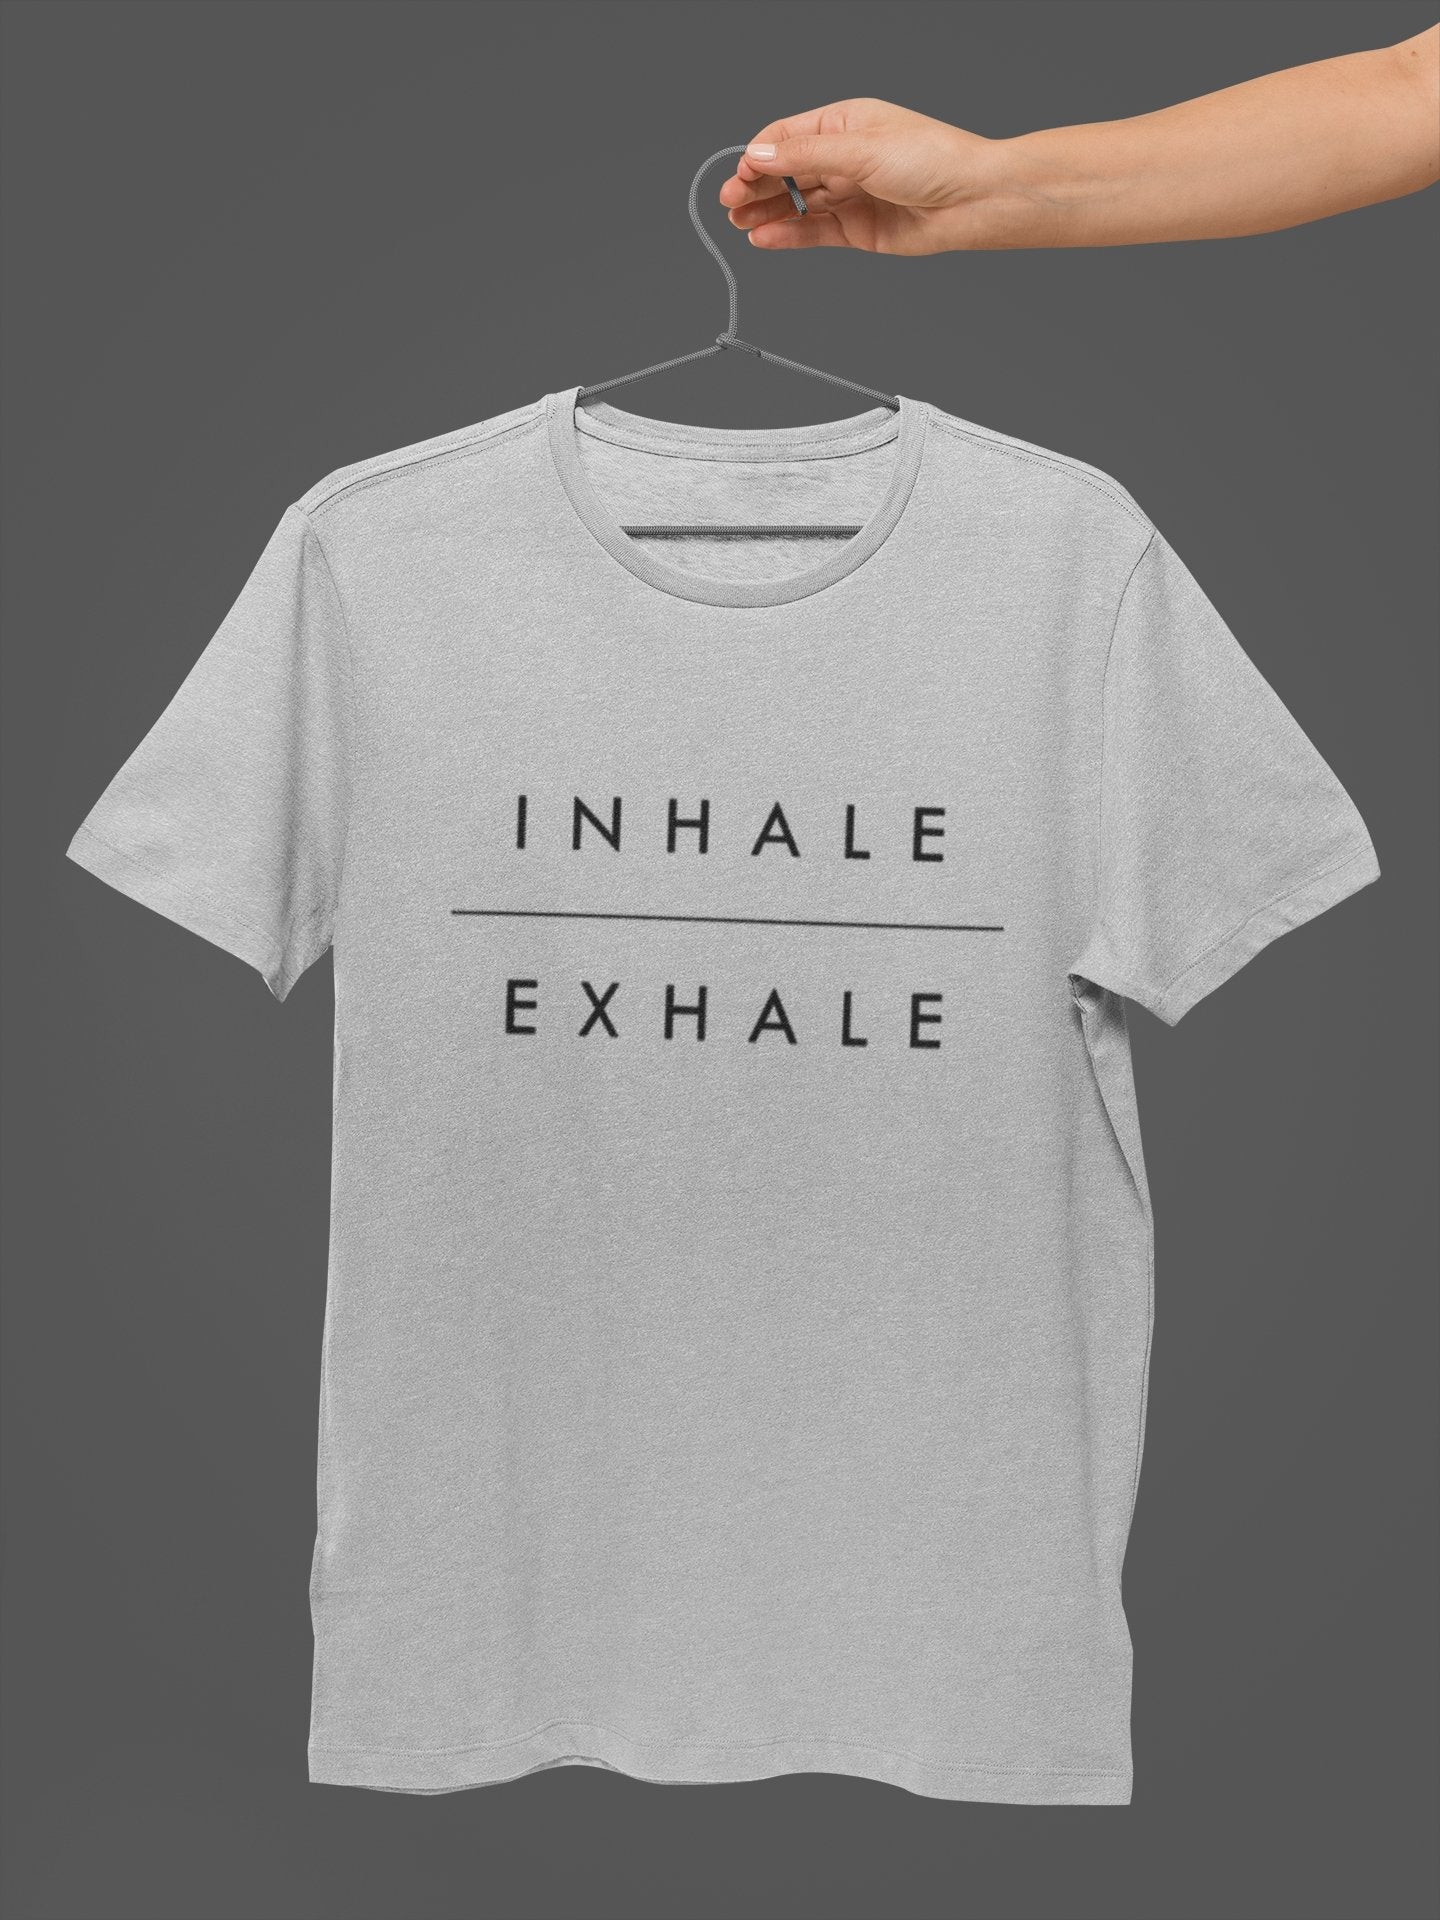 Inhale Exhale Yoga Tees for Men - Insane Tees